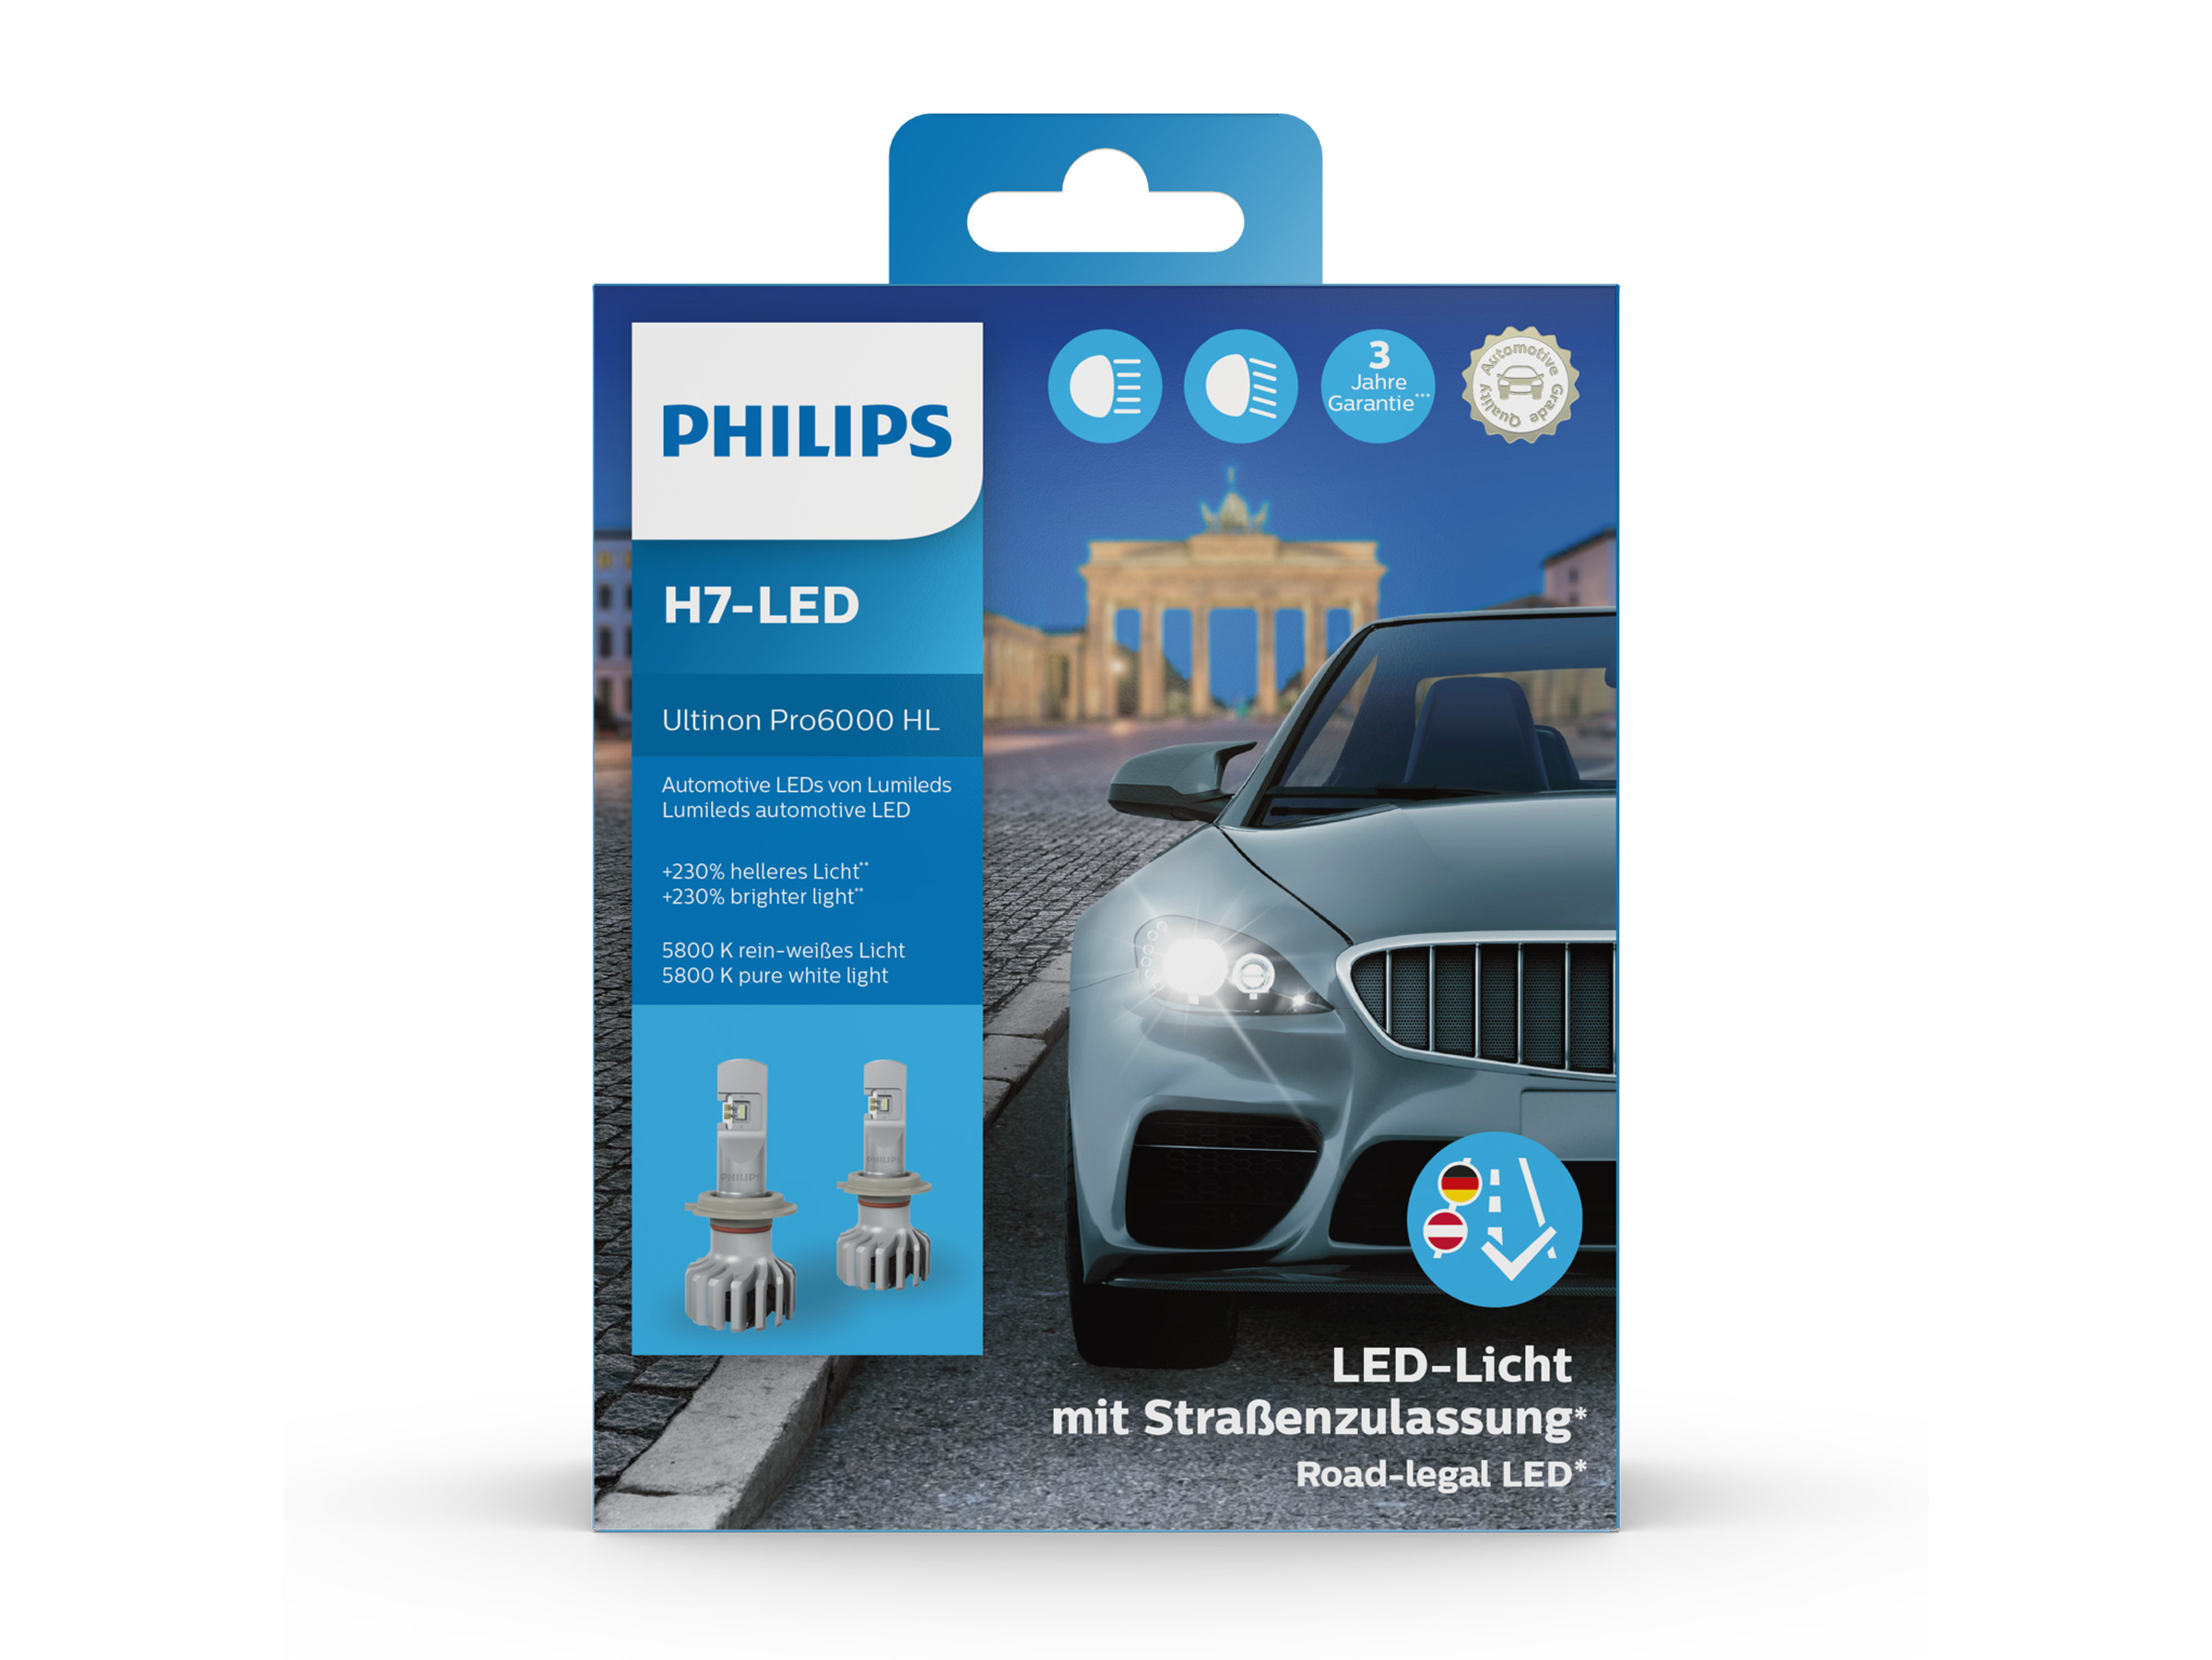 Philips Ultinon Pro6000 H7 LED für Renault Clio llll FL Typ R 2016